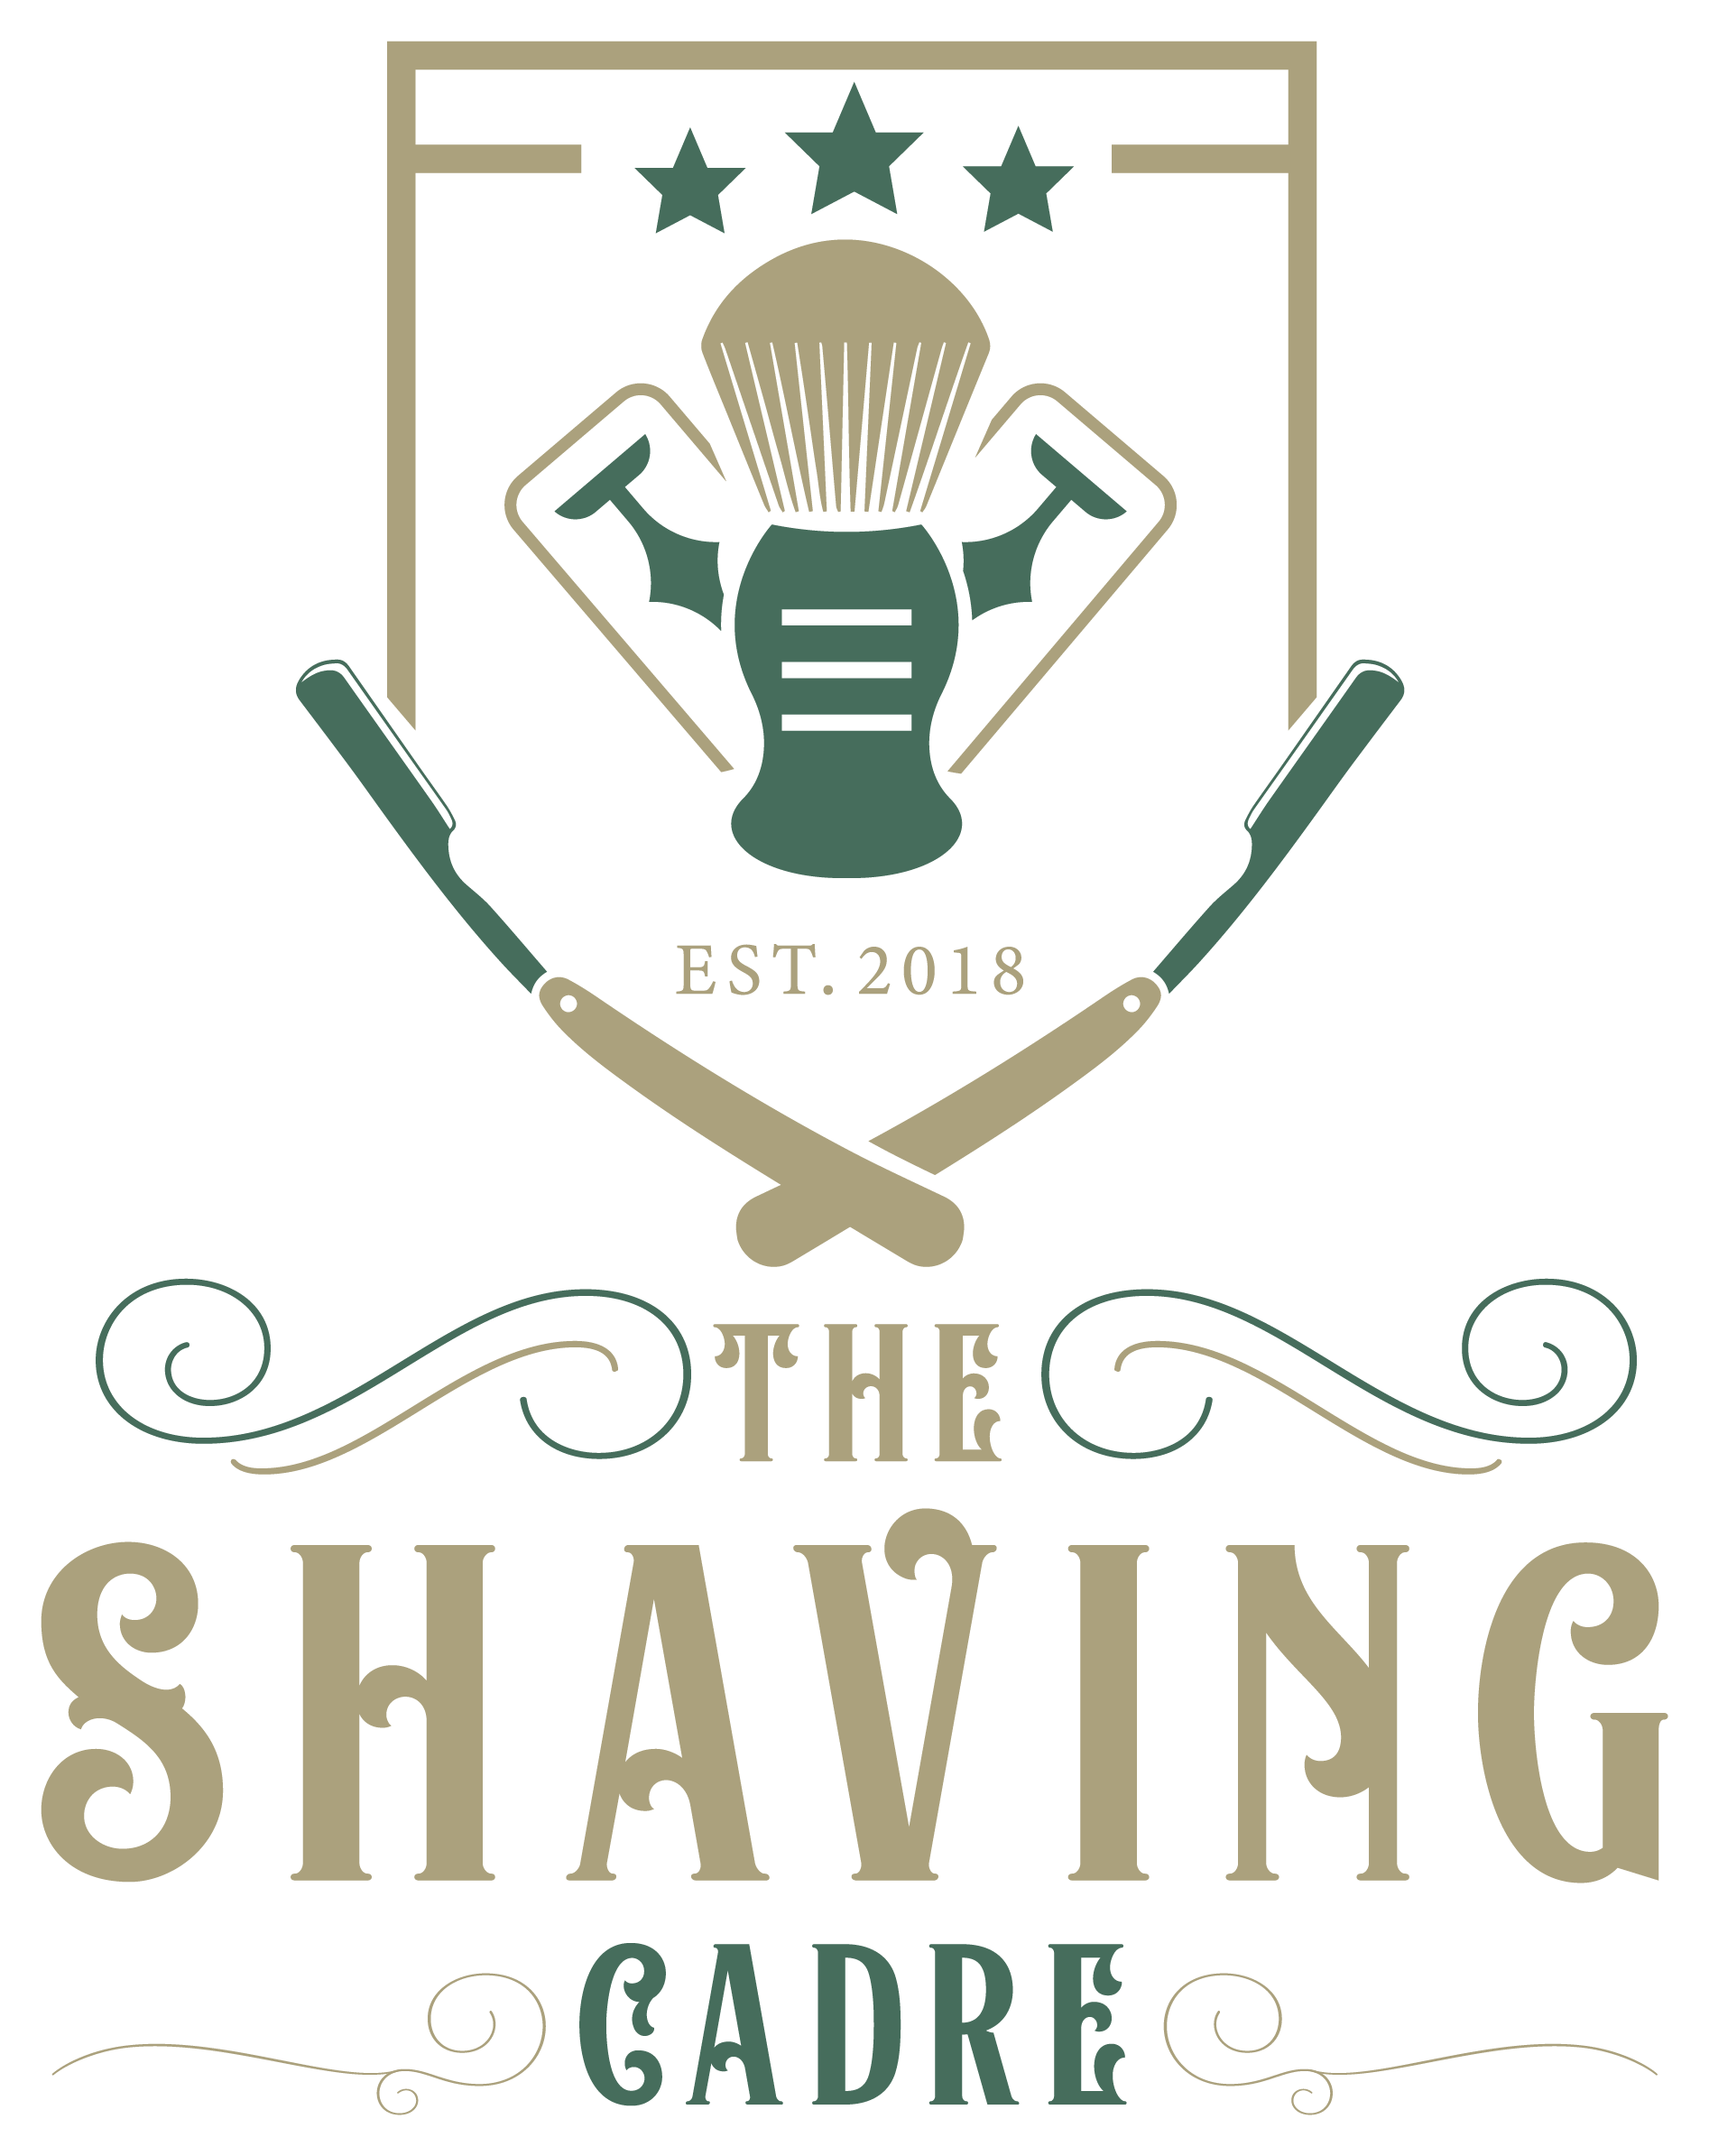 The Shaving Cadre